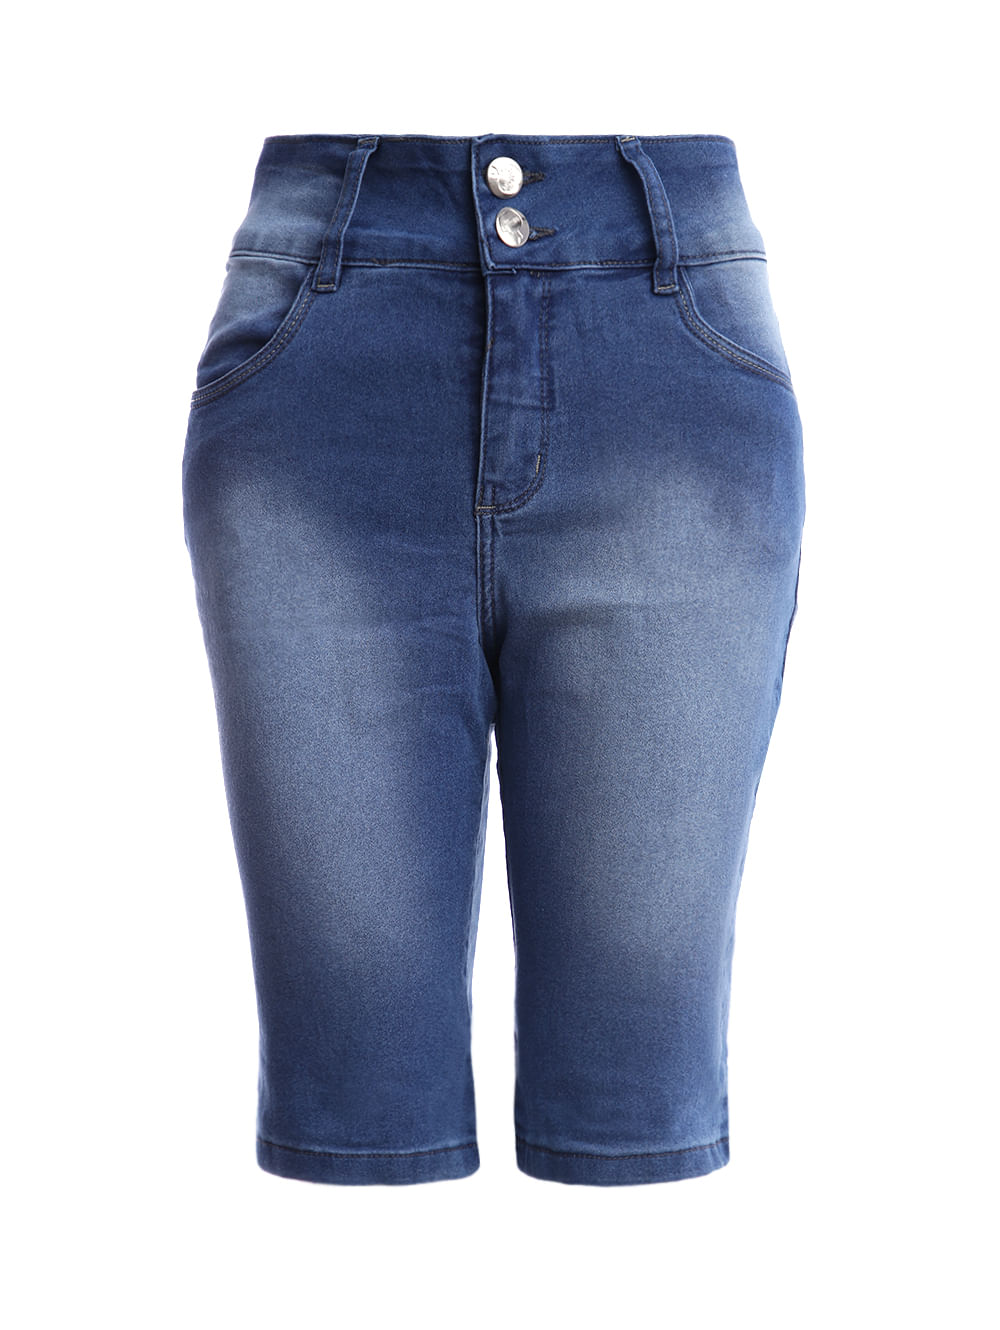 Womens Jeans Moda Pitusa Dollhause Pantalon de Mujer media Pierna Mezclilla  azul 